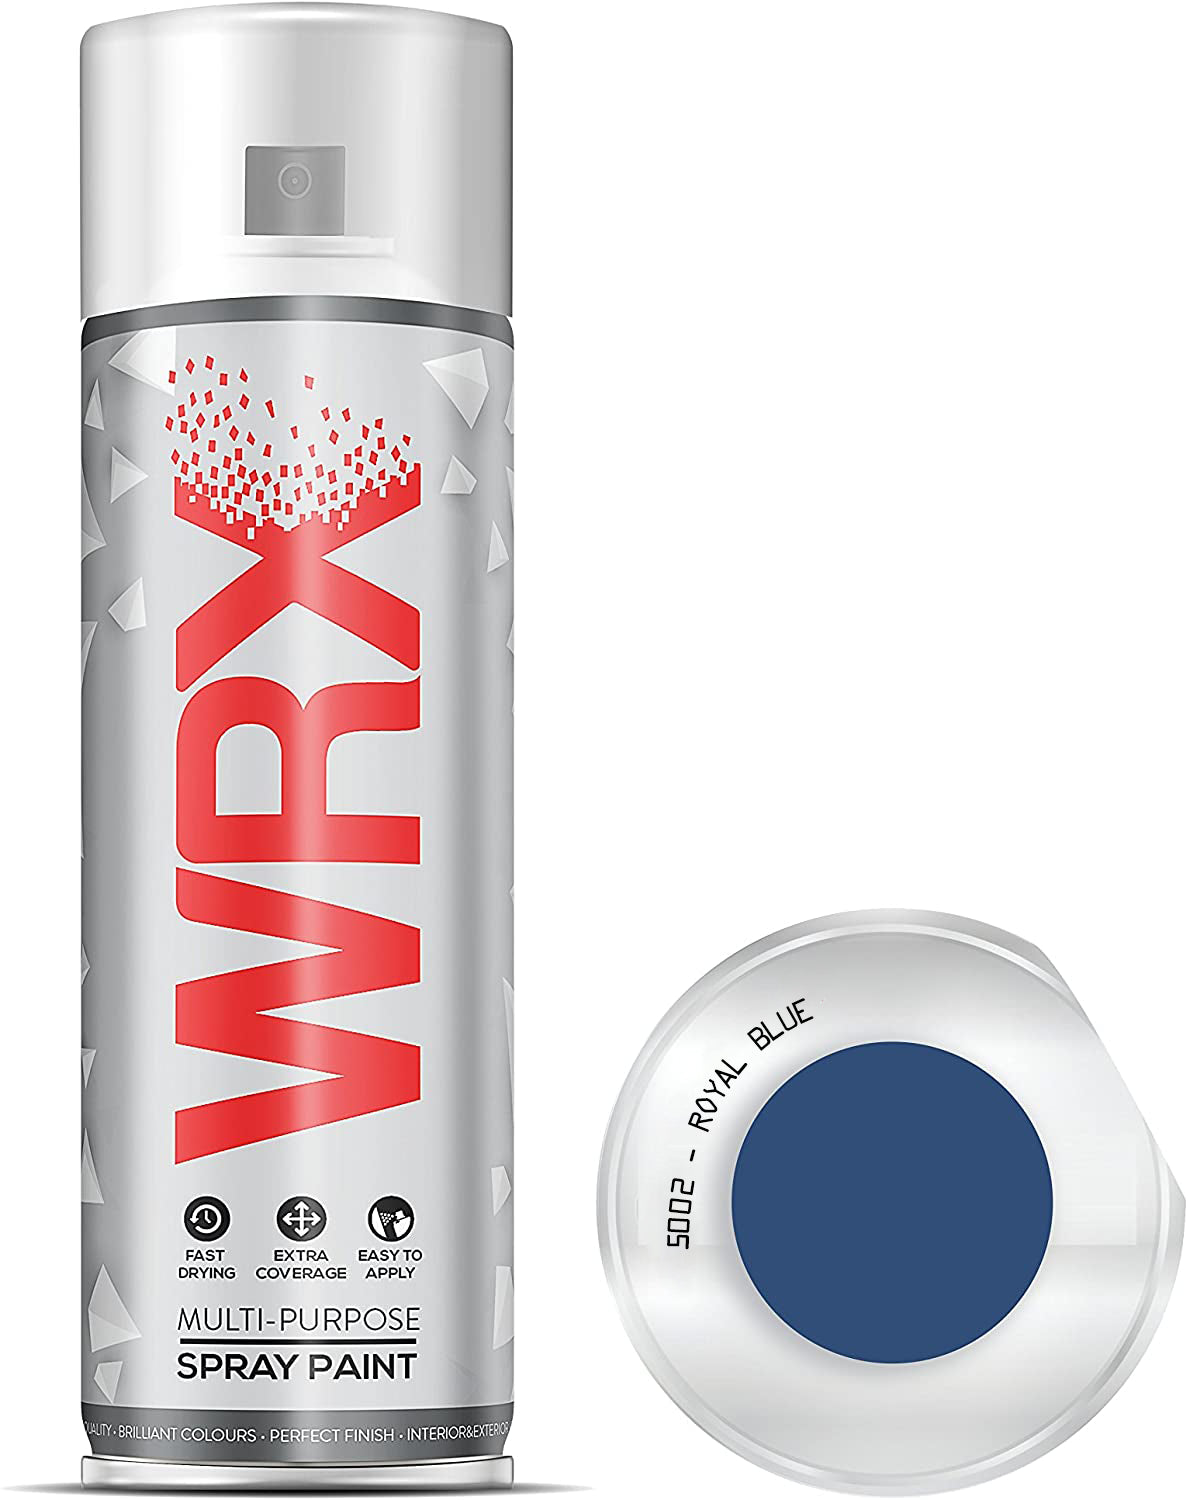 WRX Gloss Royal Blue 5002 Spray Paint 400ml